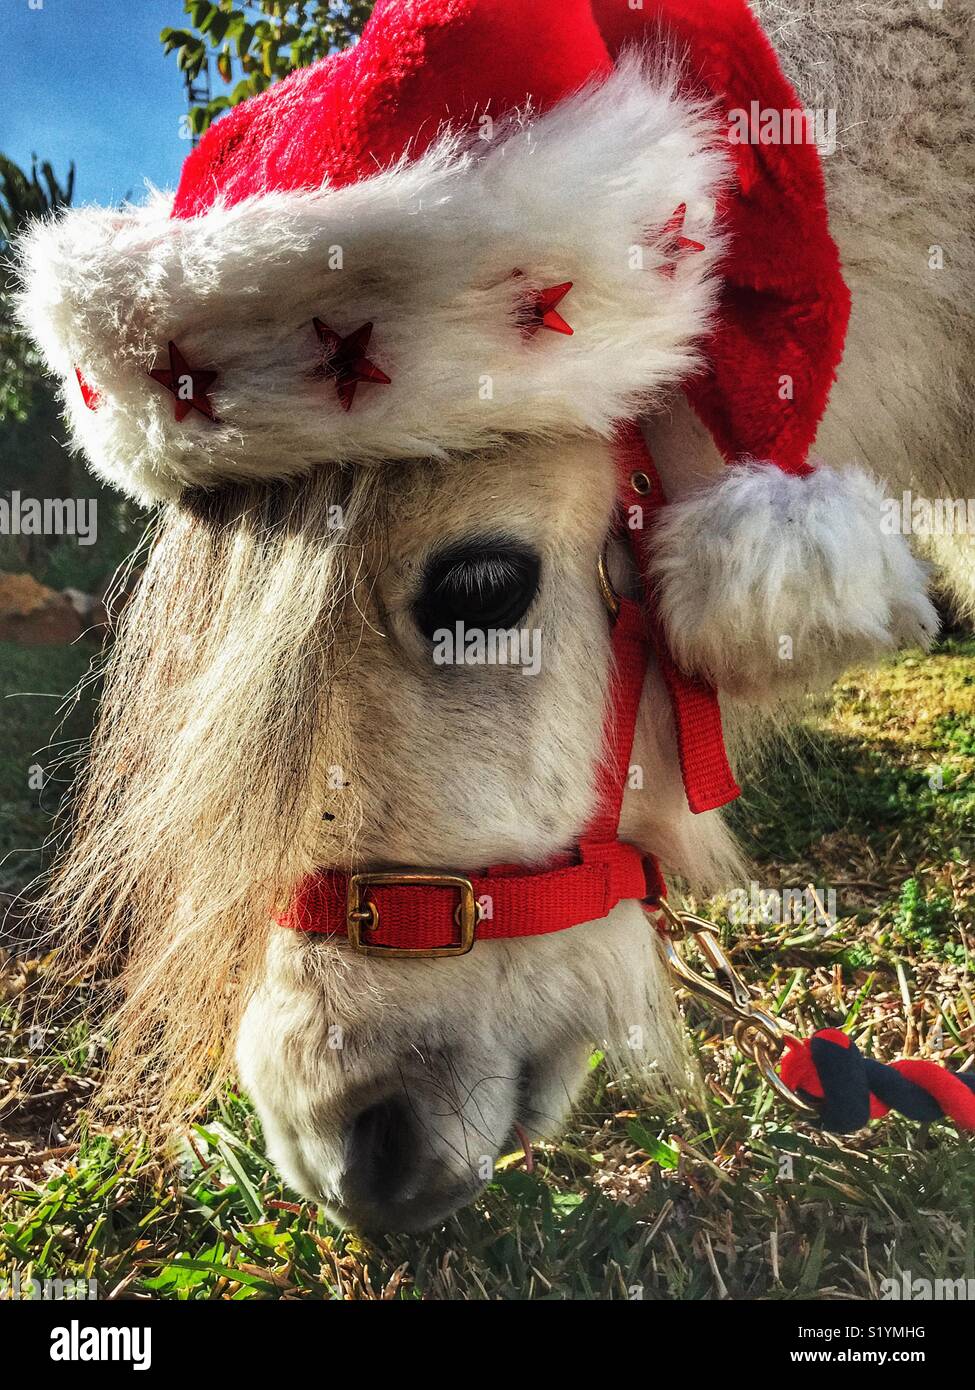 Falabella miniature horse grazing on grass, wearing s Santa bobble hat Stock Photo